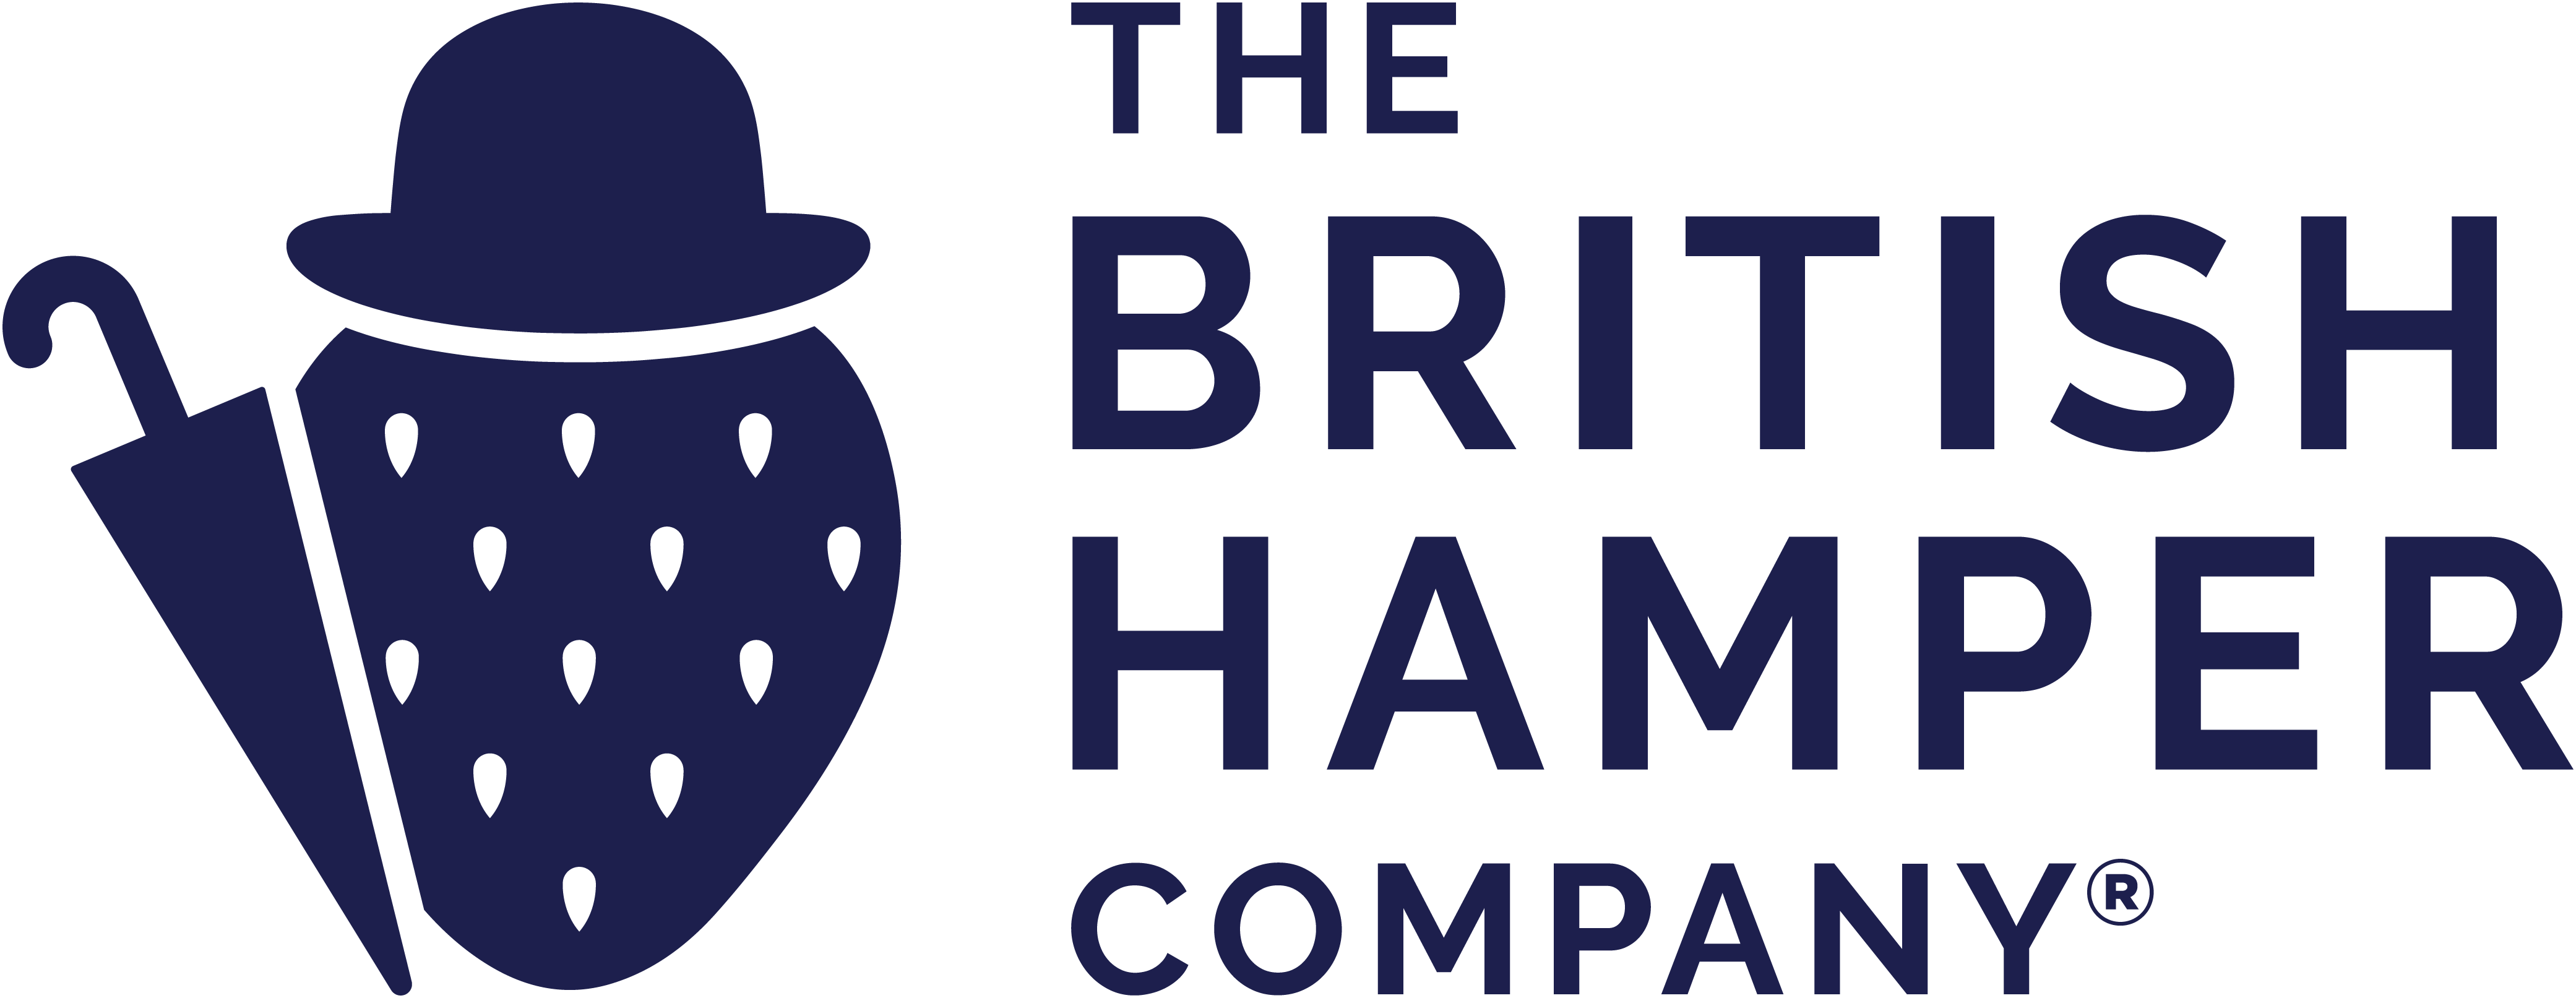 British Hamper Company